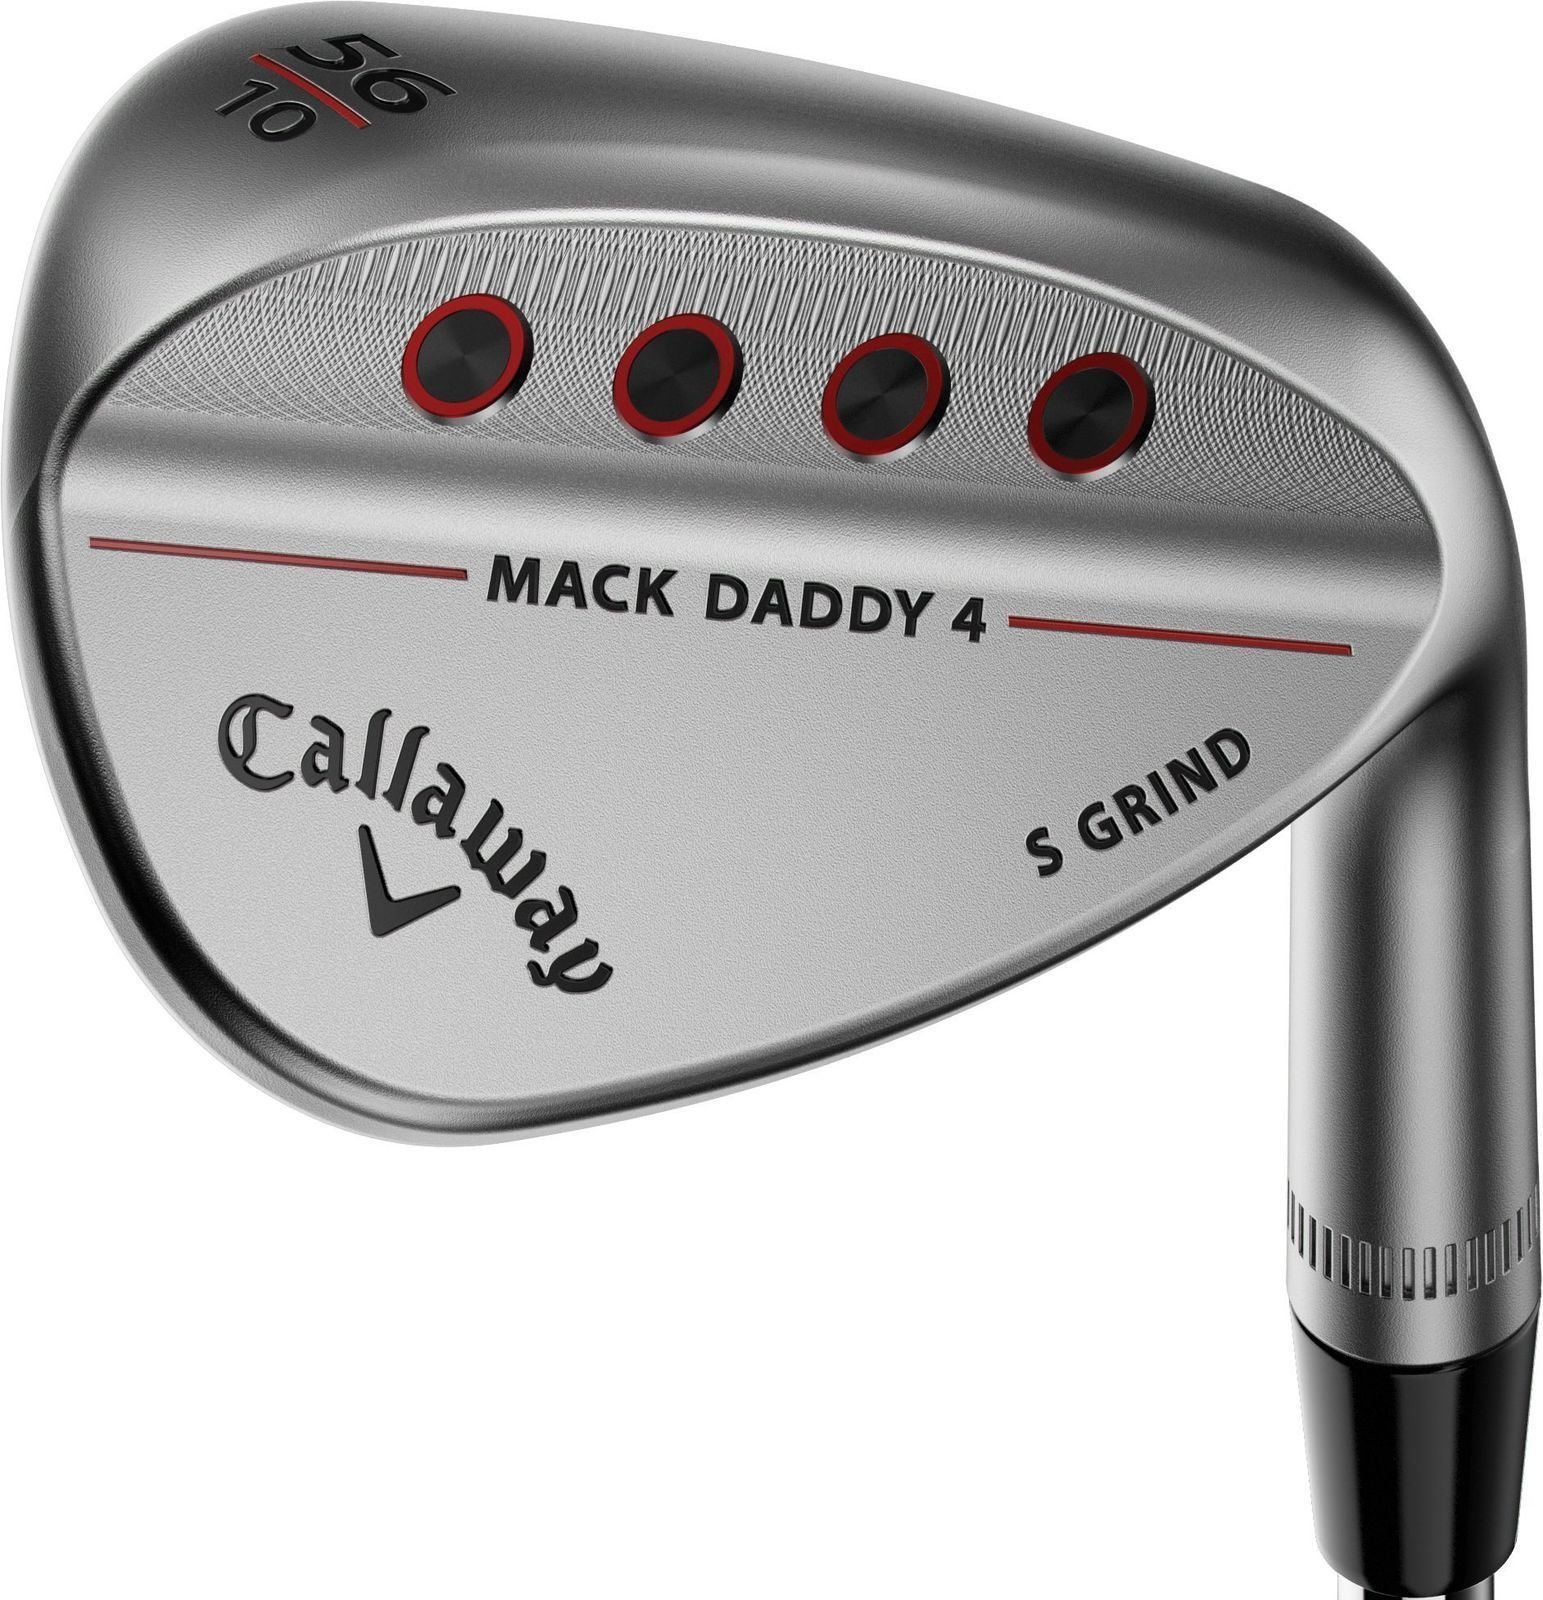 Club de golf - wedge Callaway Mack Daddy 4 Chrome Wedge 52-10 S-Grind droitier